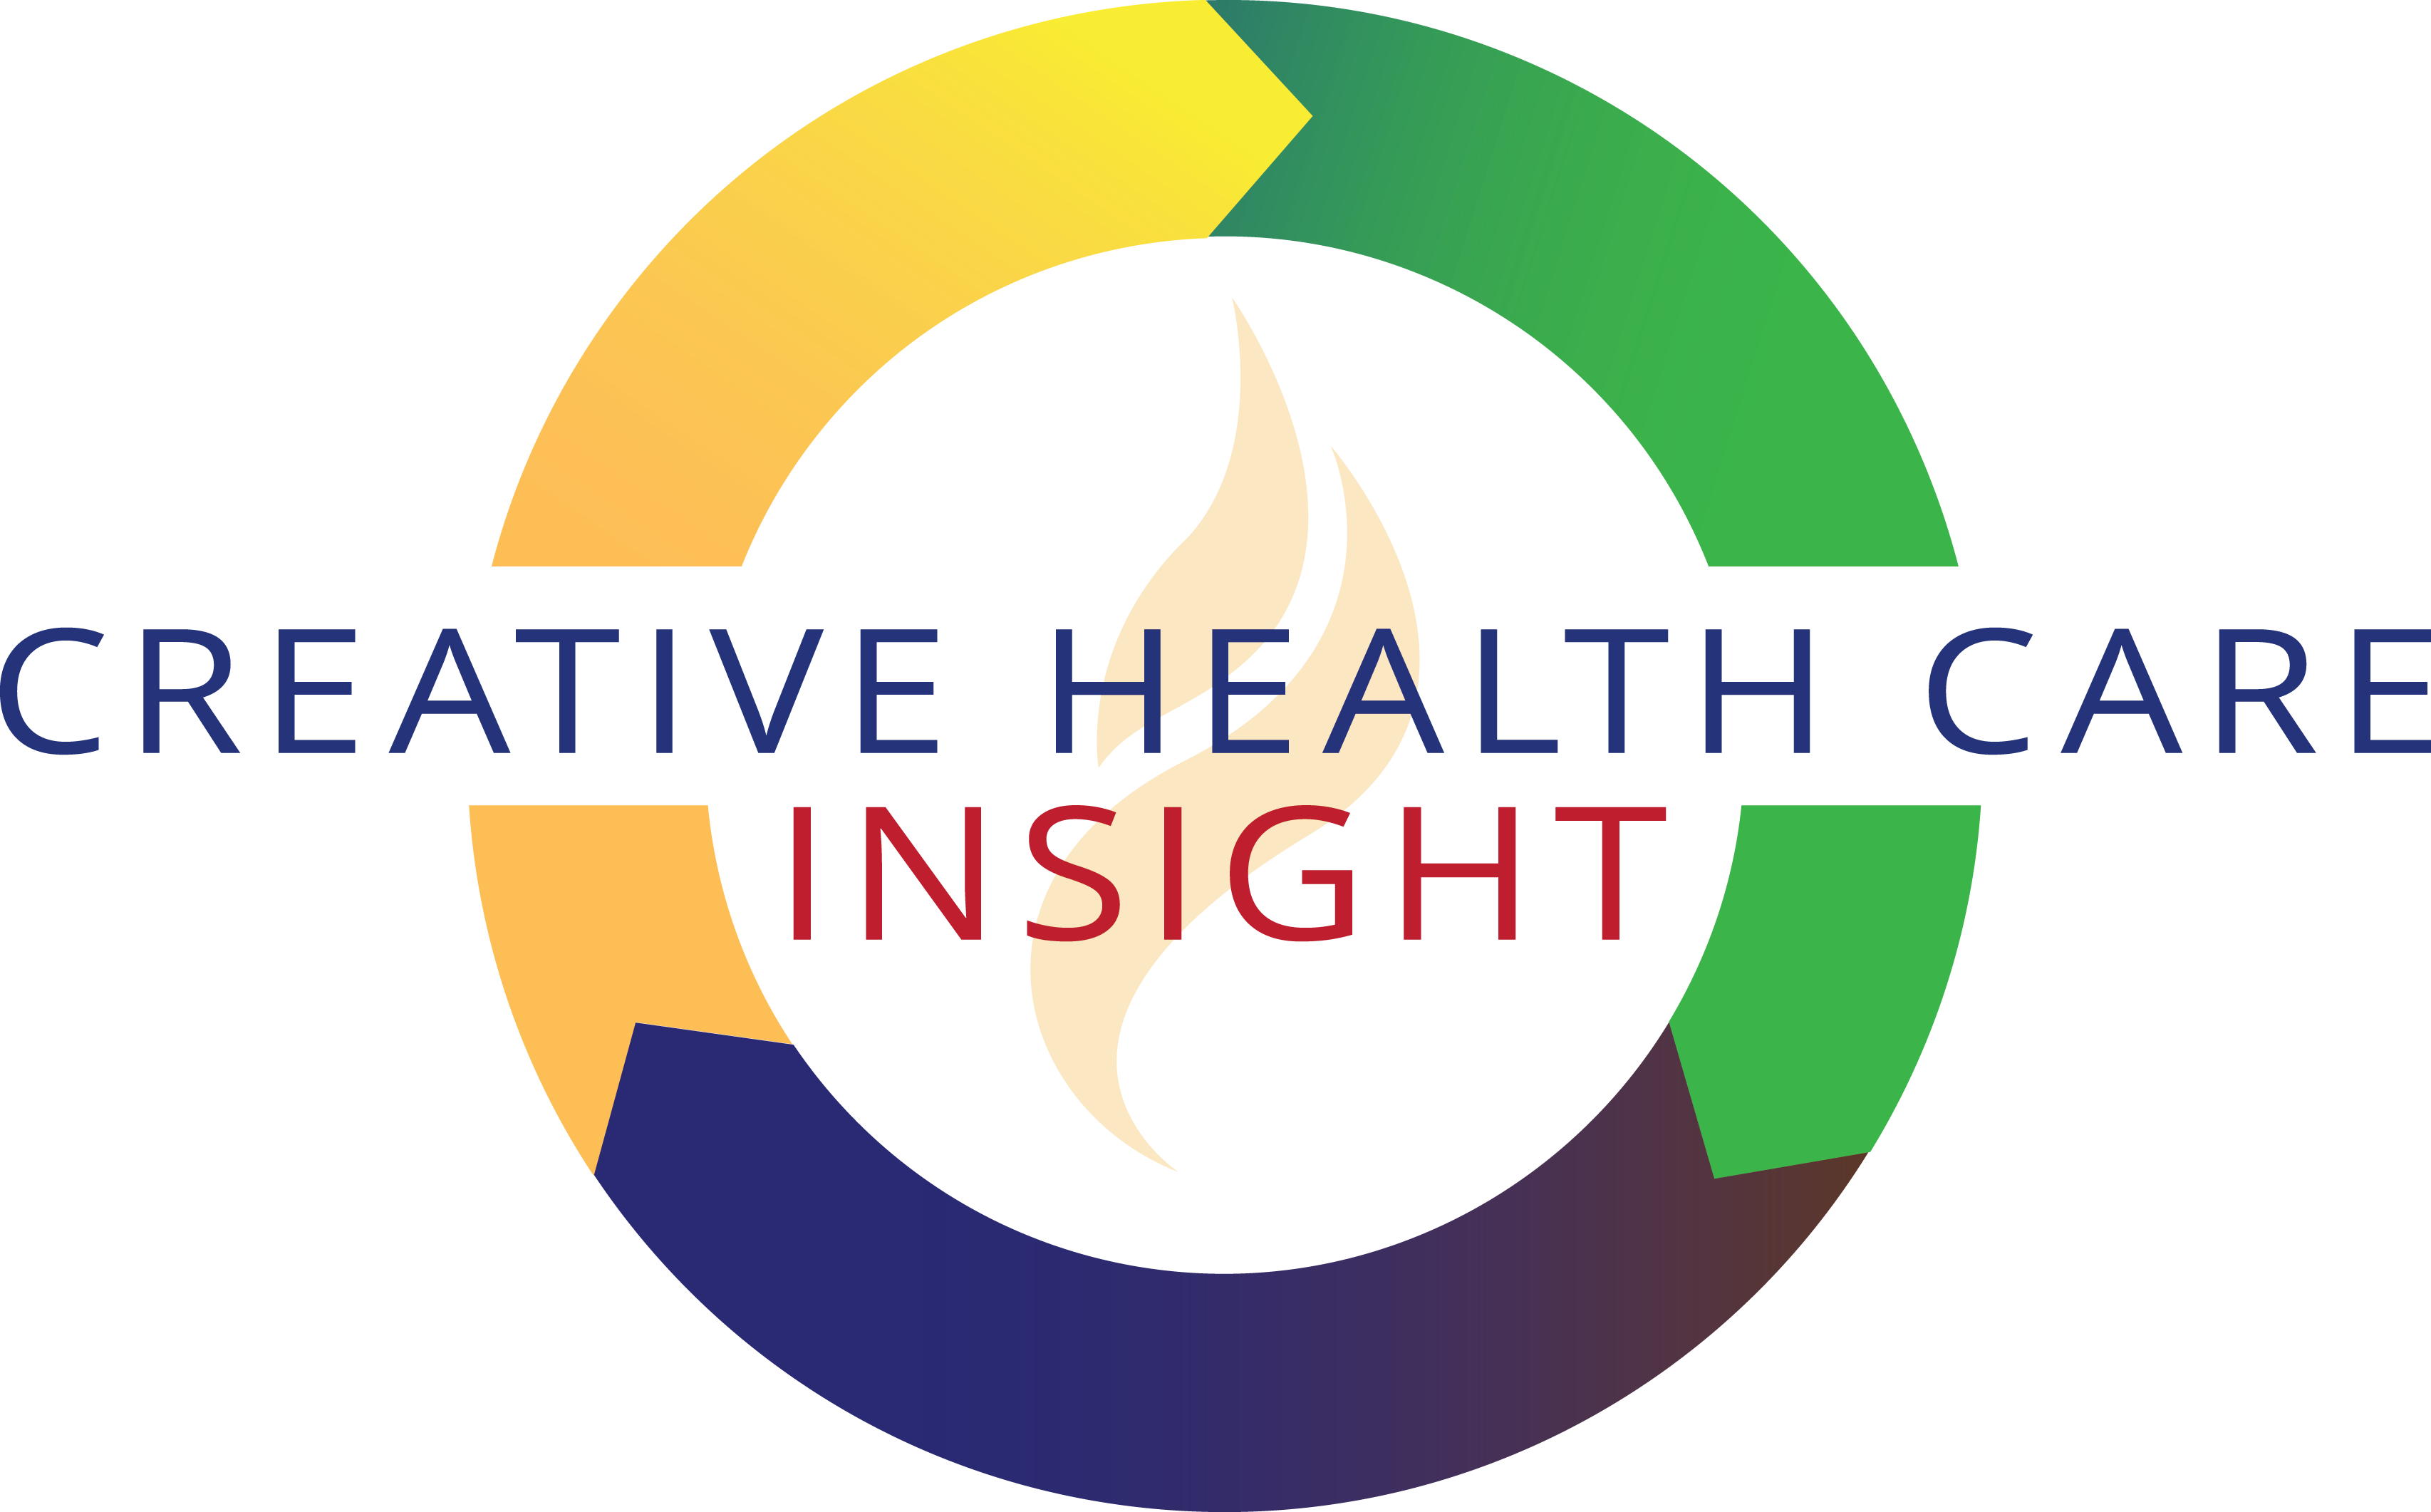 Creative Health Care Insight